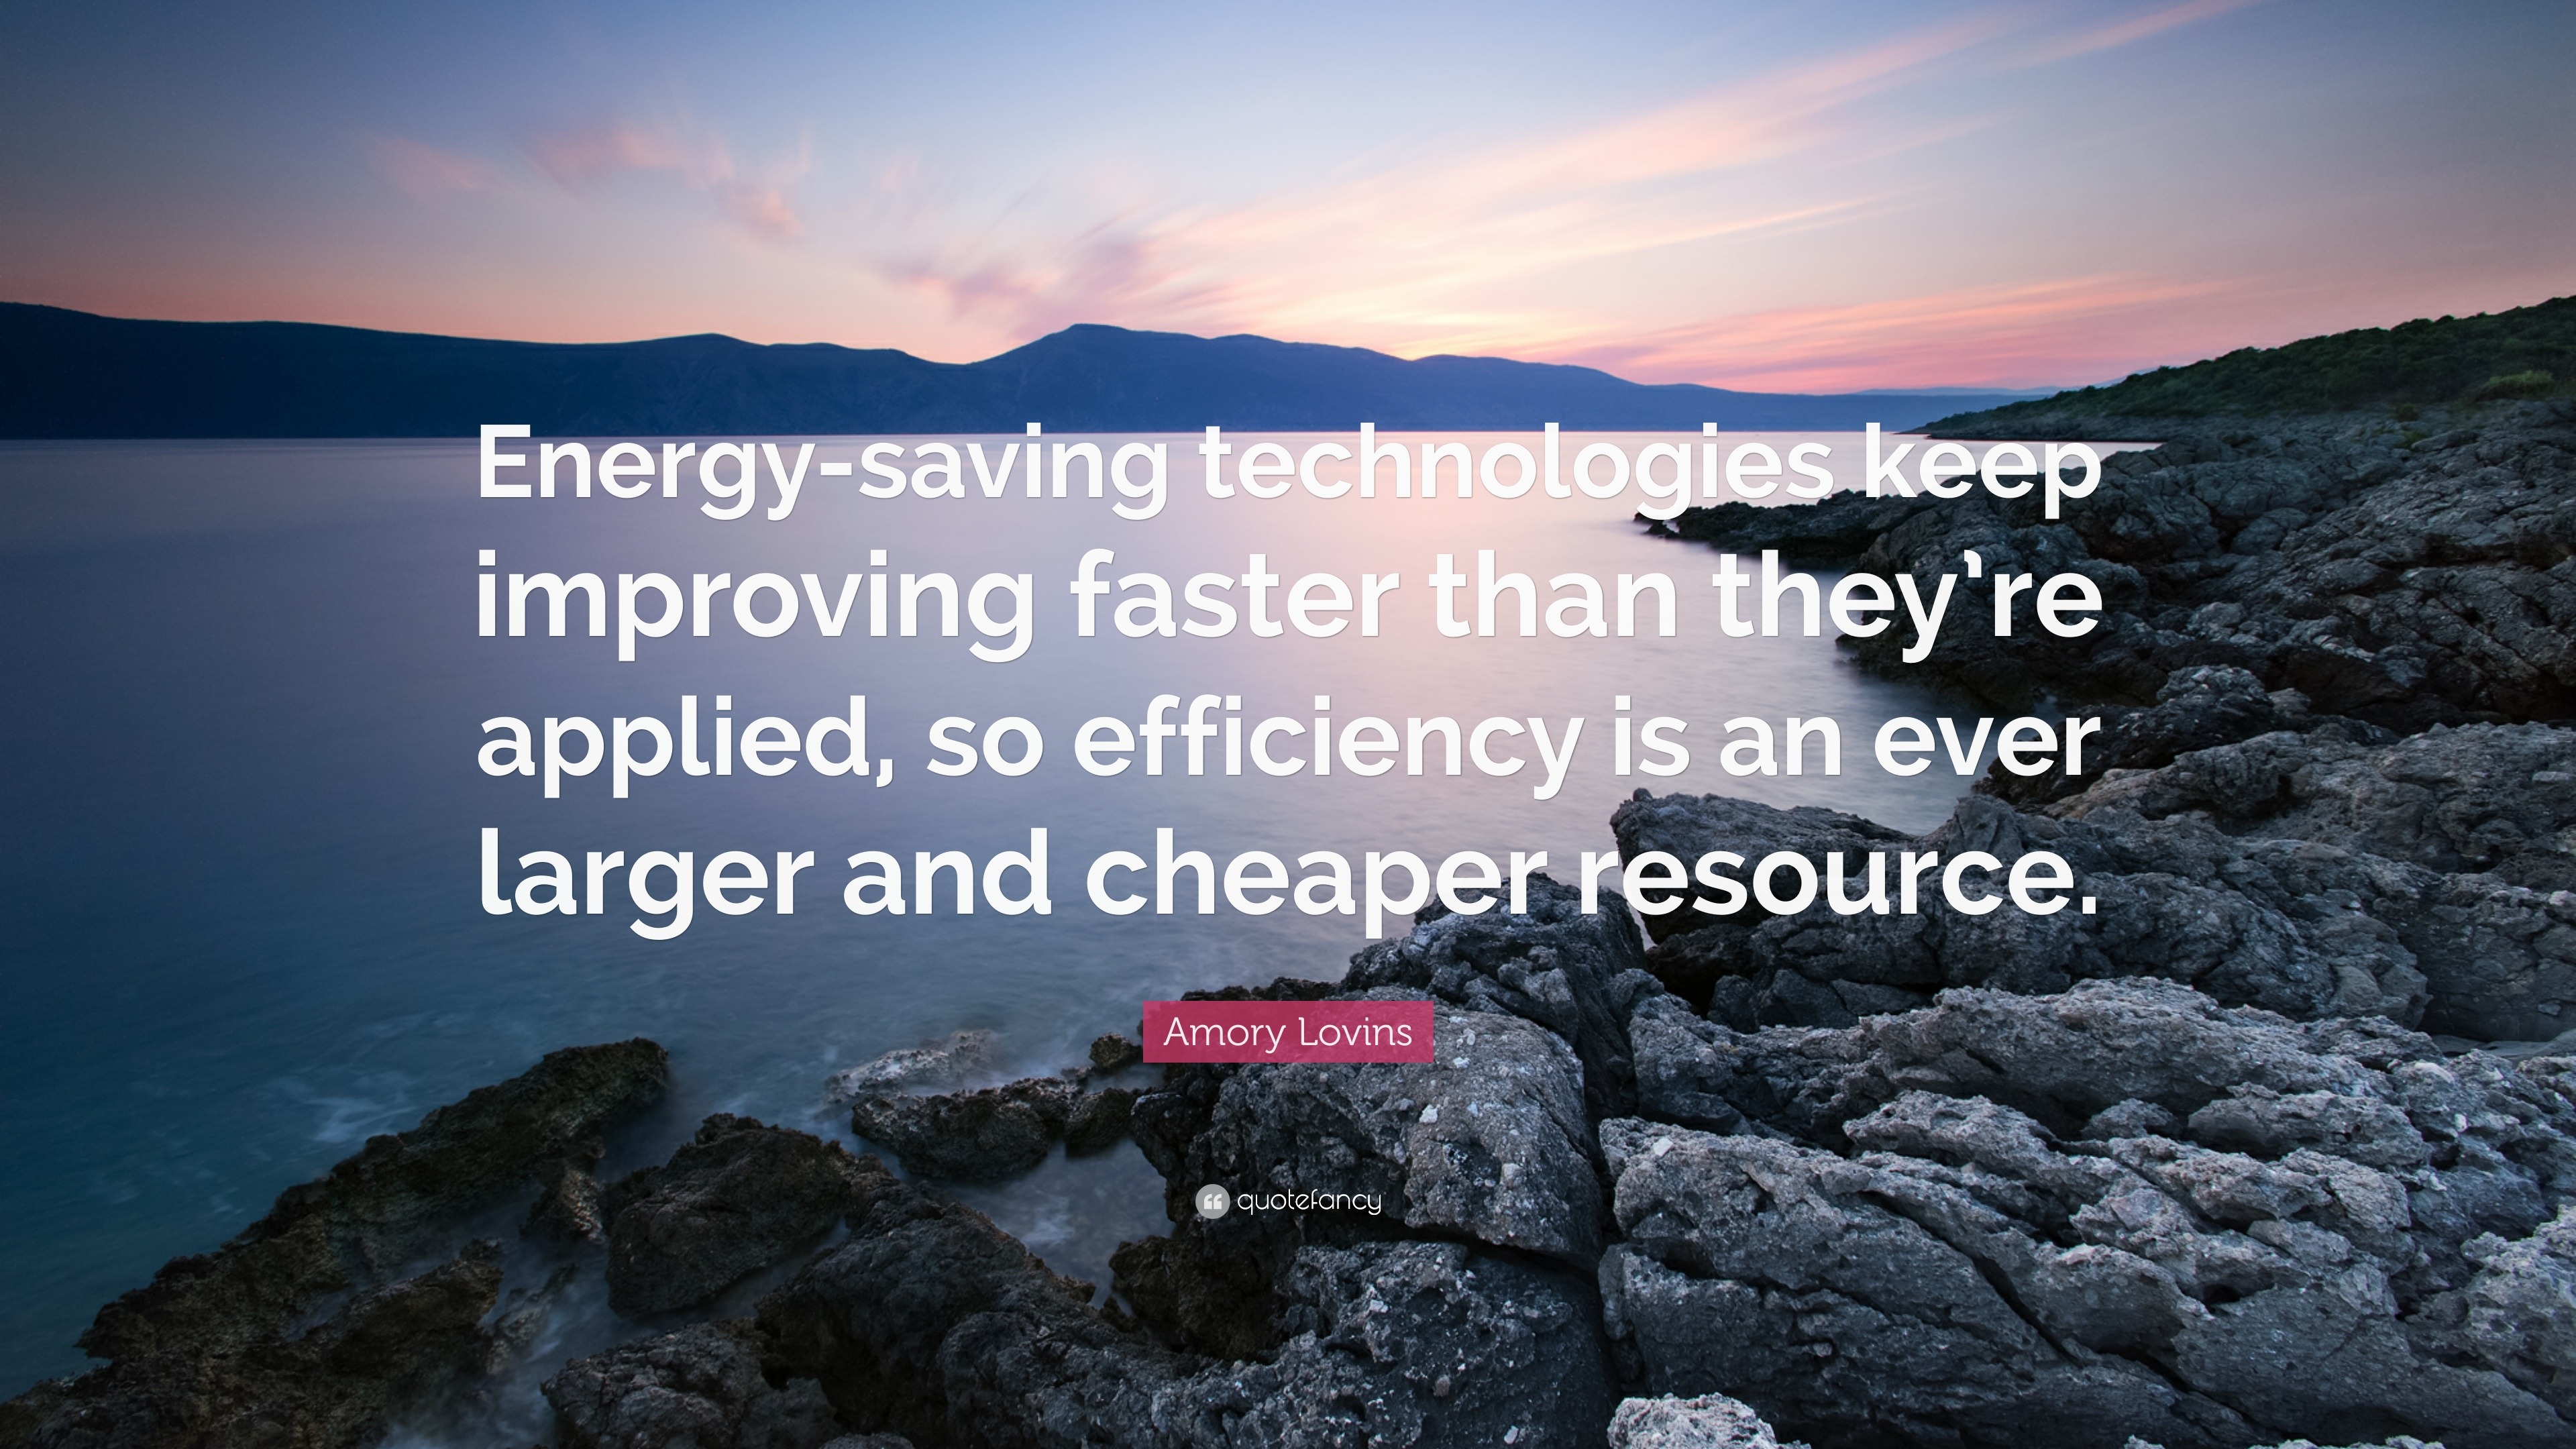 Amory Lovins Quote “Energysaving technologies keep